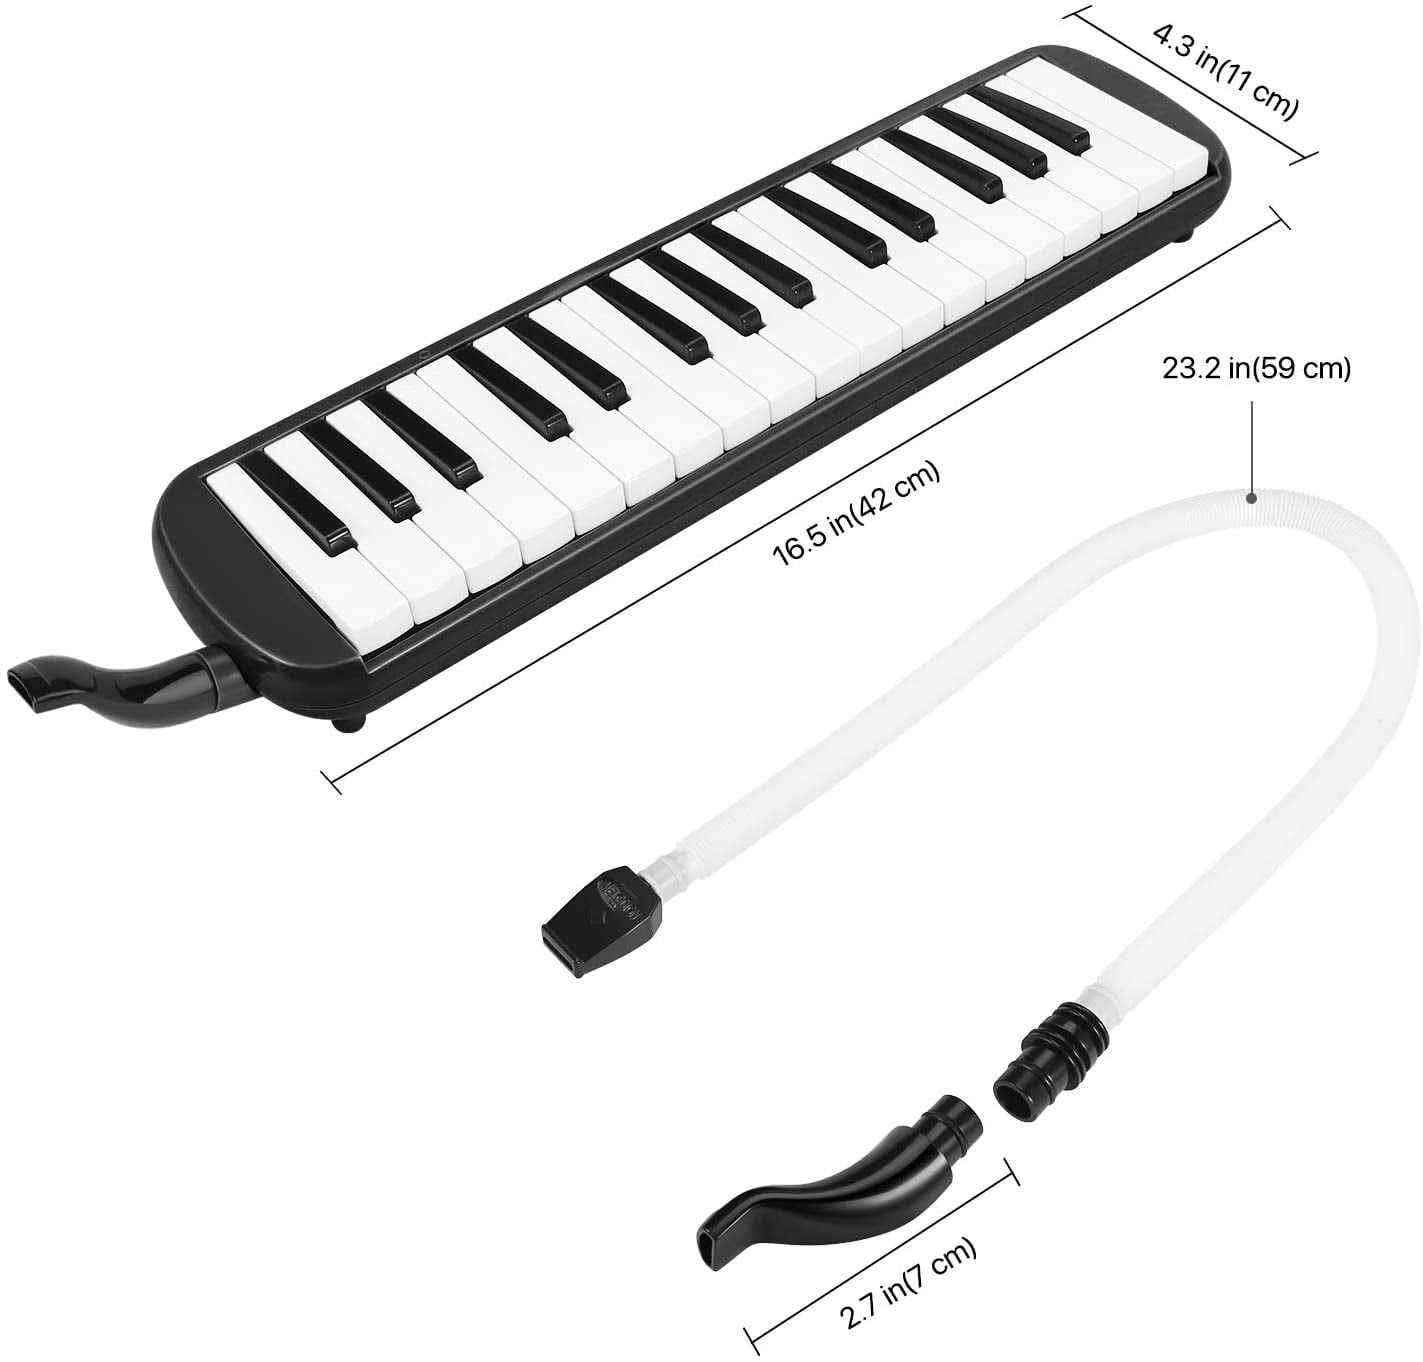 Keyboard Harmonica Instrument Lectronify Black Professional Blow-Organ 